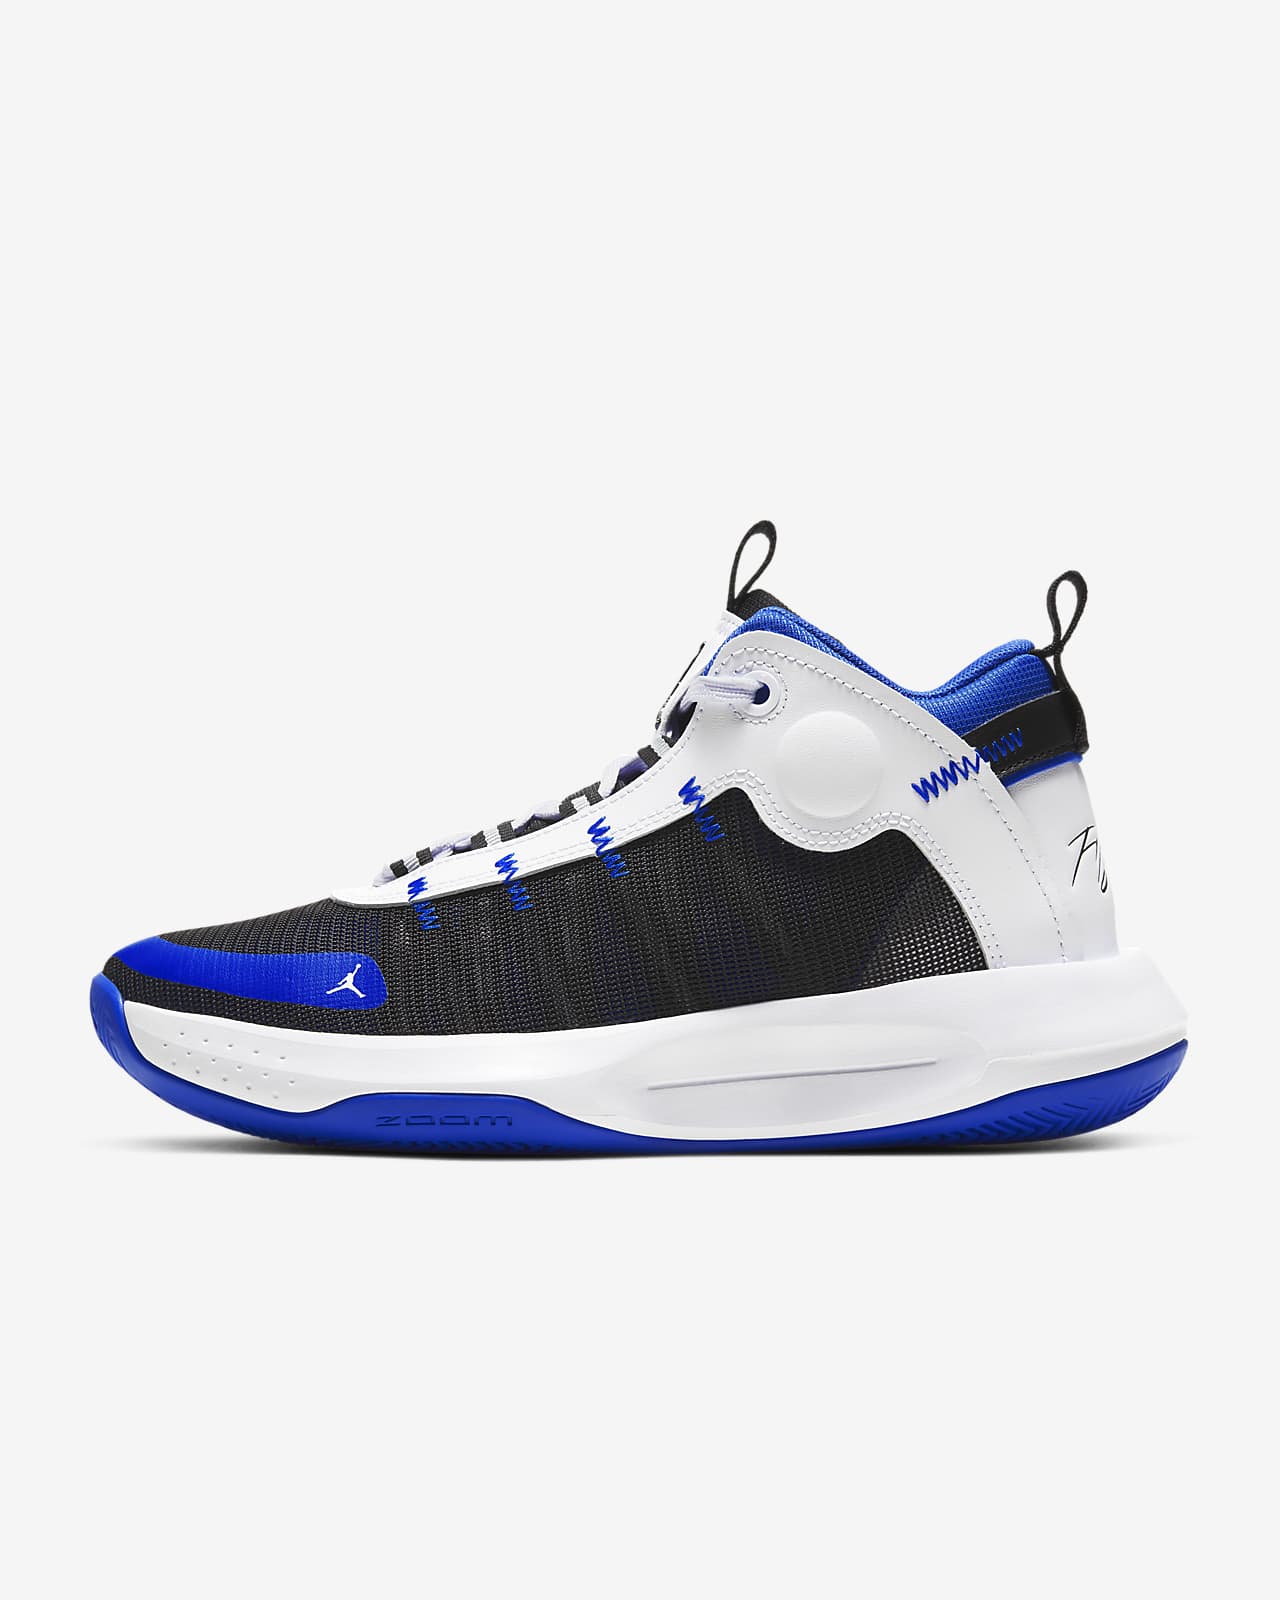 jumpman 2020 basketball shoes